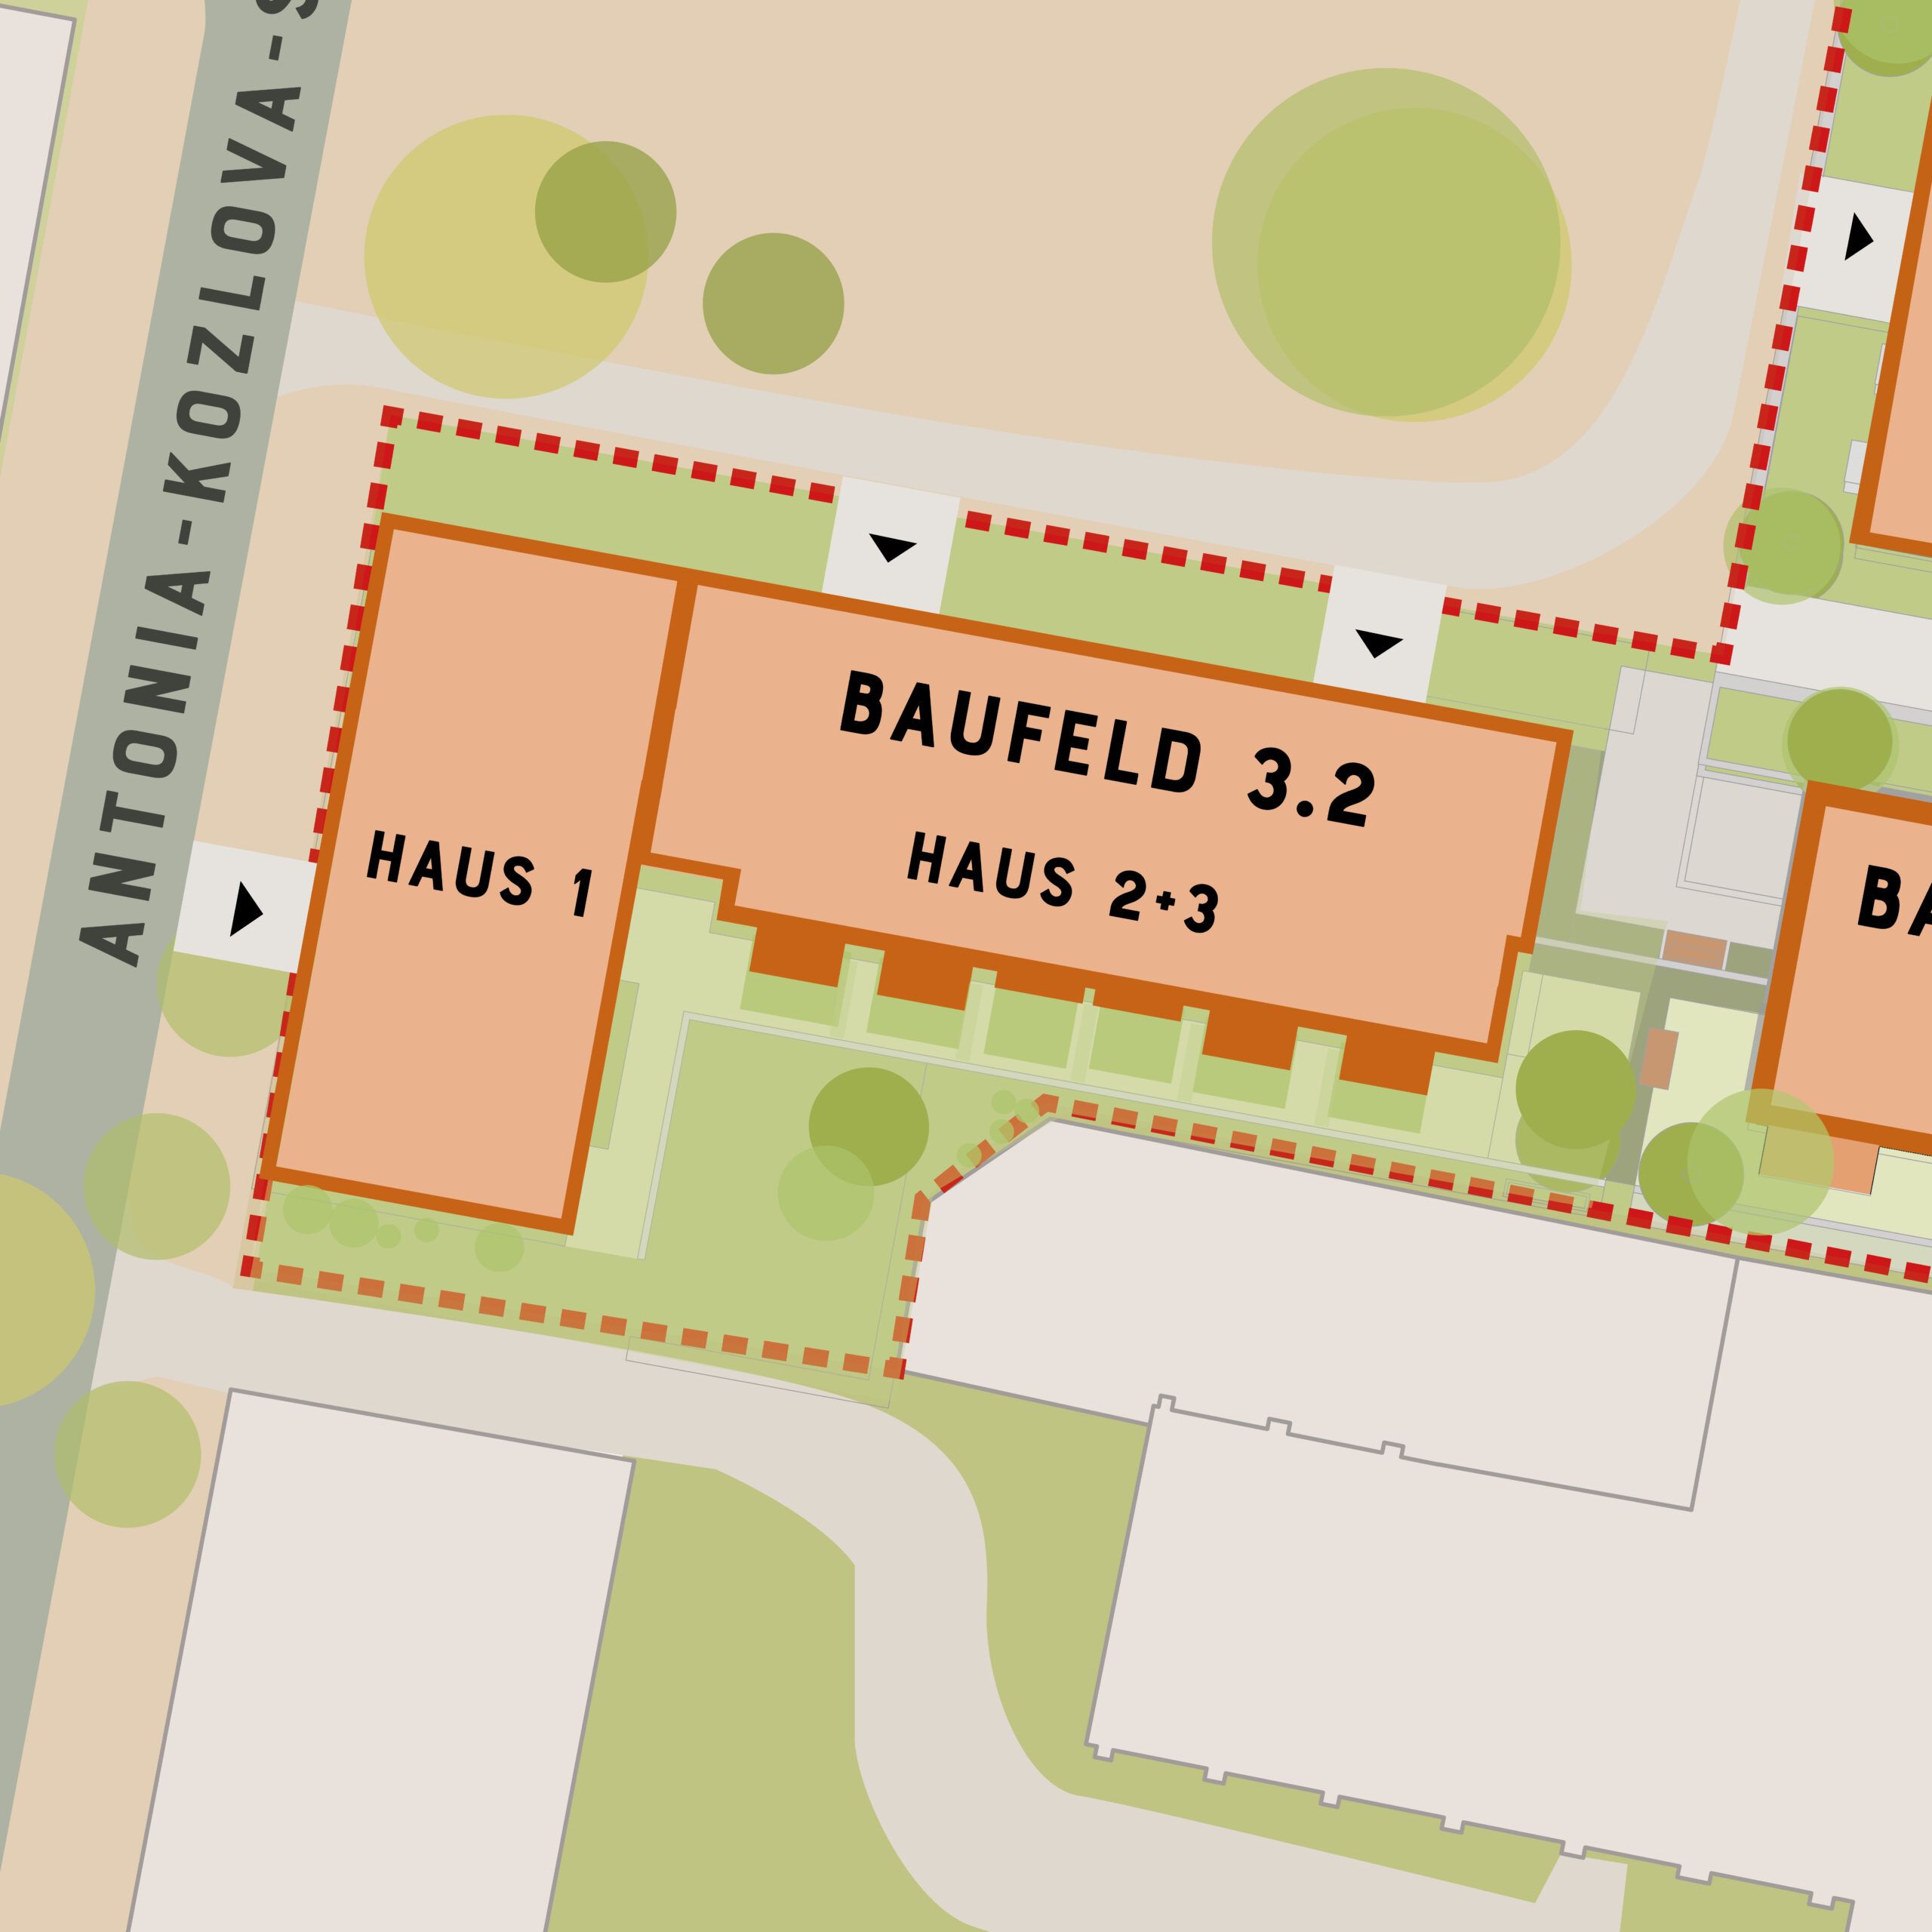 Baufeld 3.2